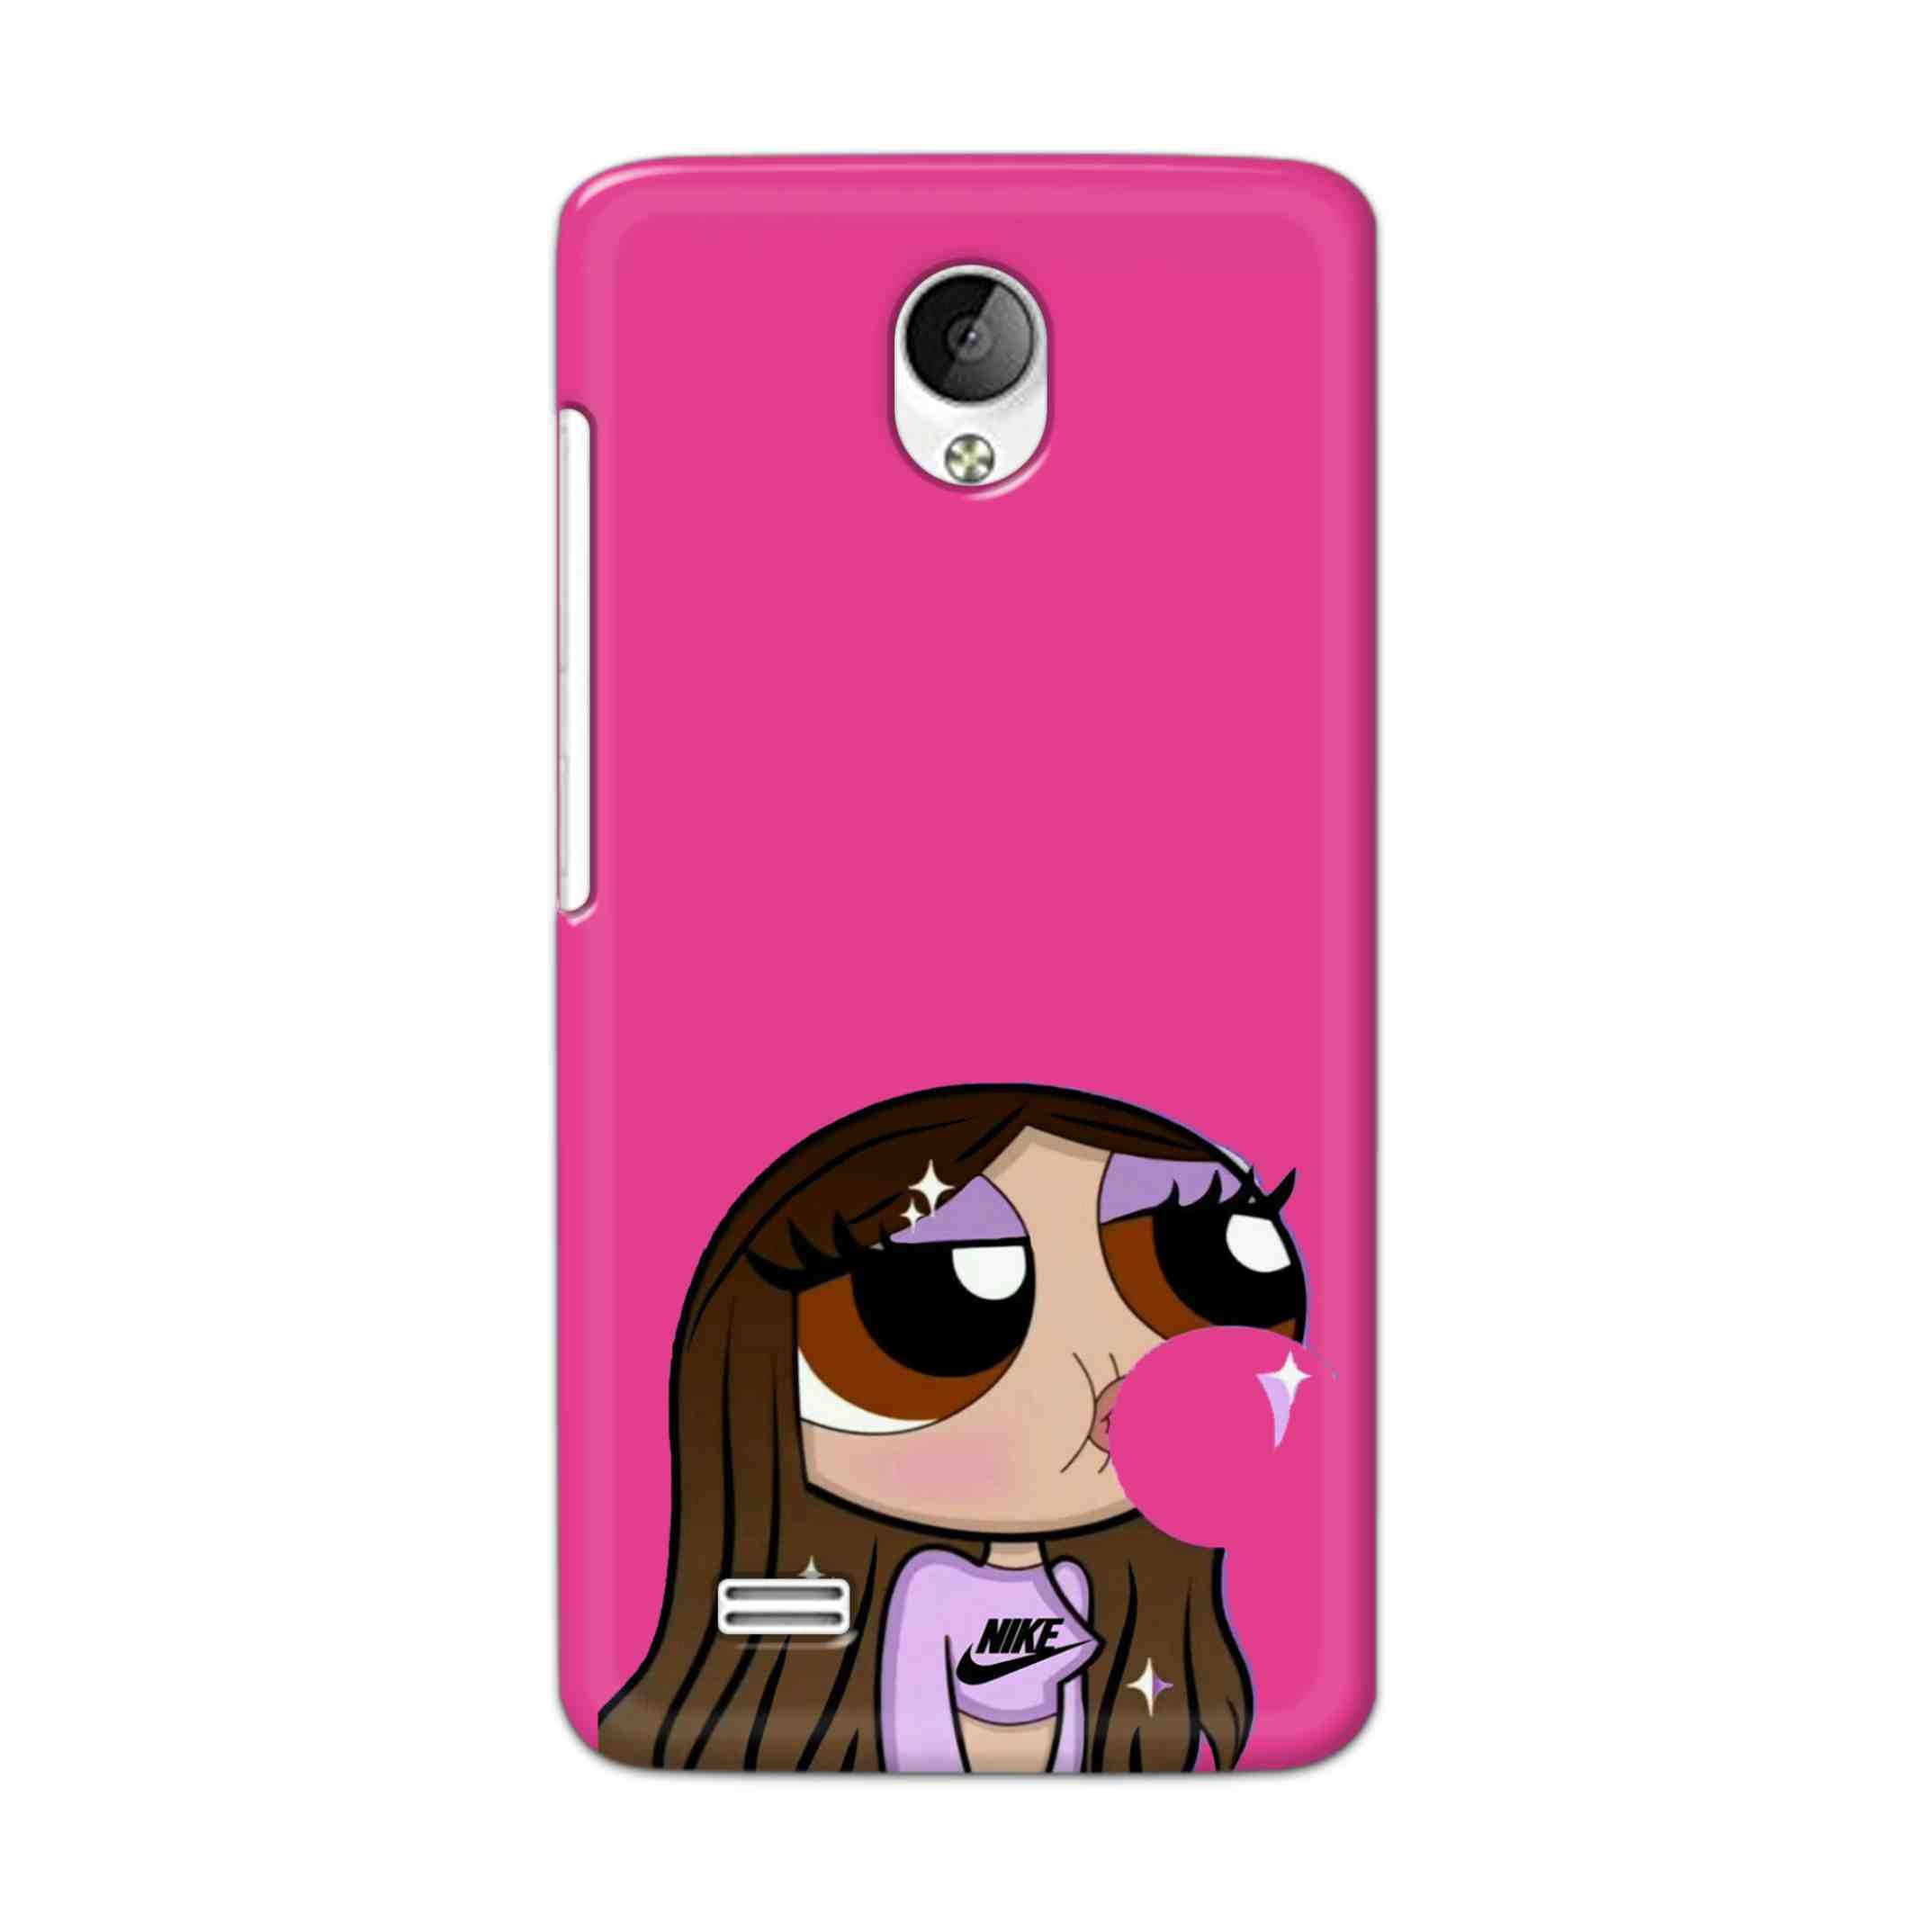 Buy Bubble Girl Hard Back Mobile Phone Case Cover For Vivo Y21 / Vivo Y21L Online